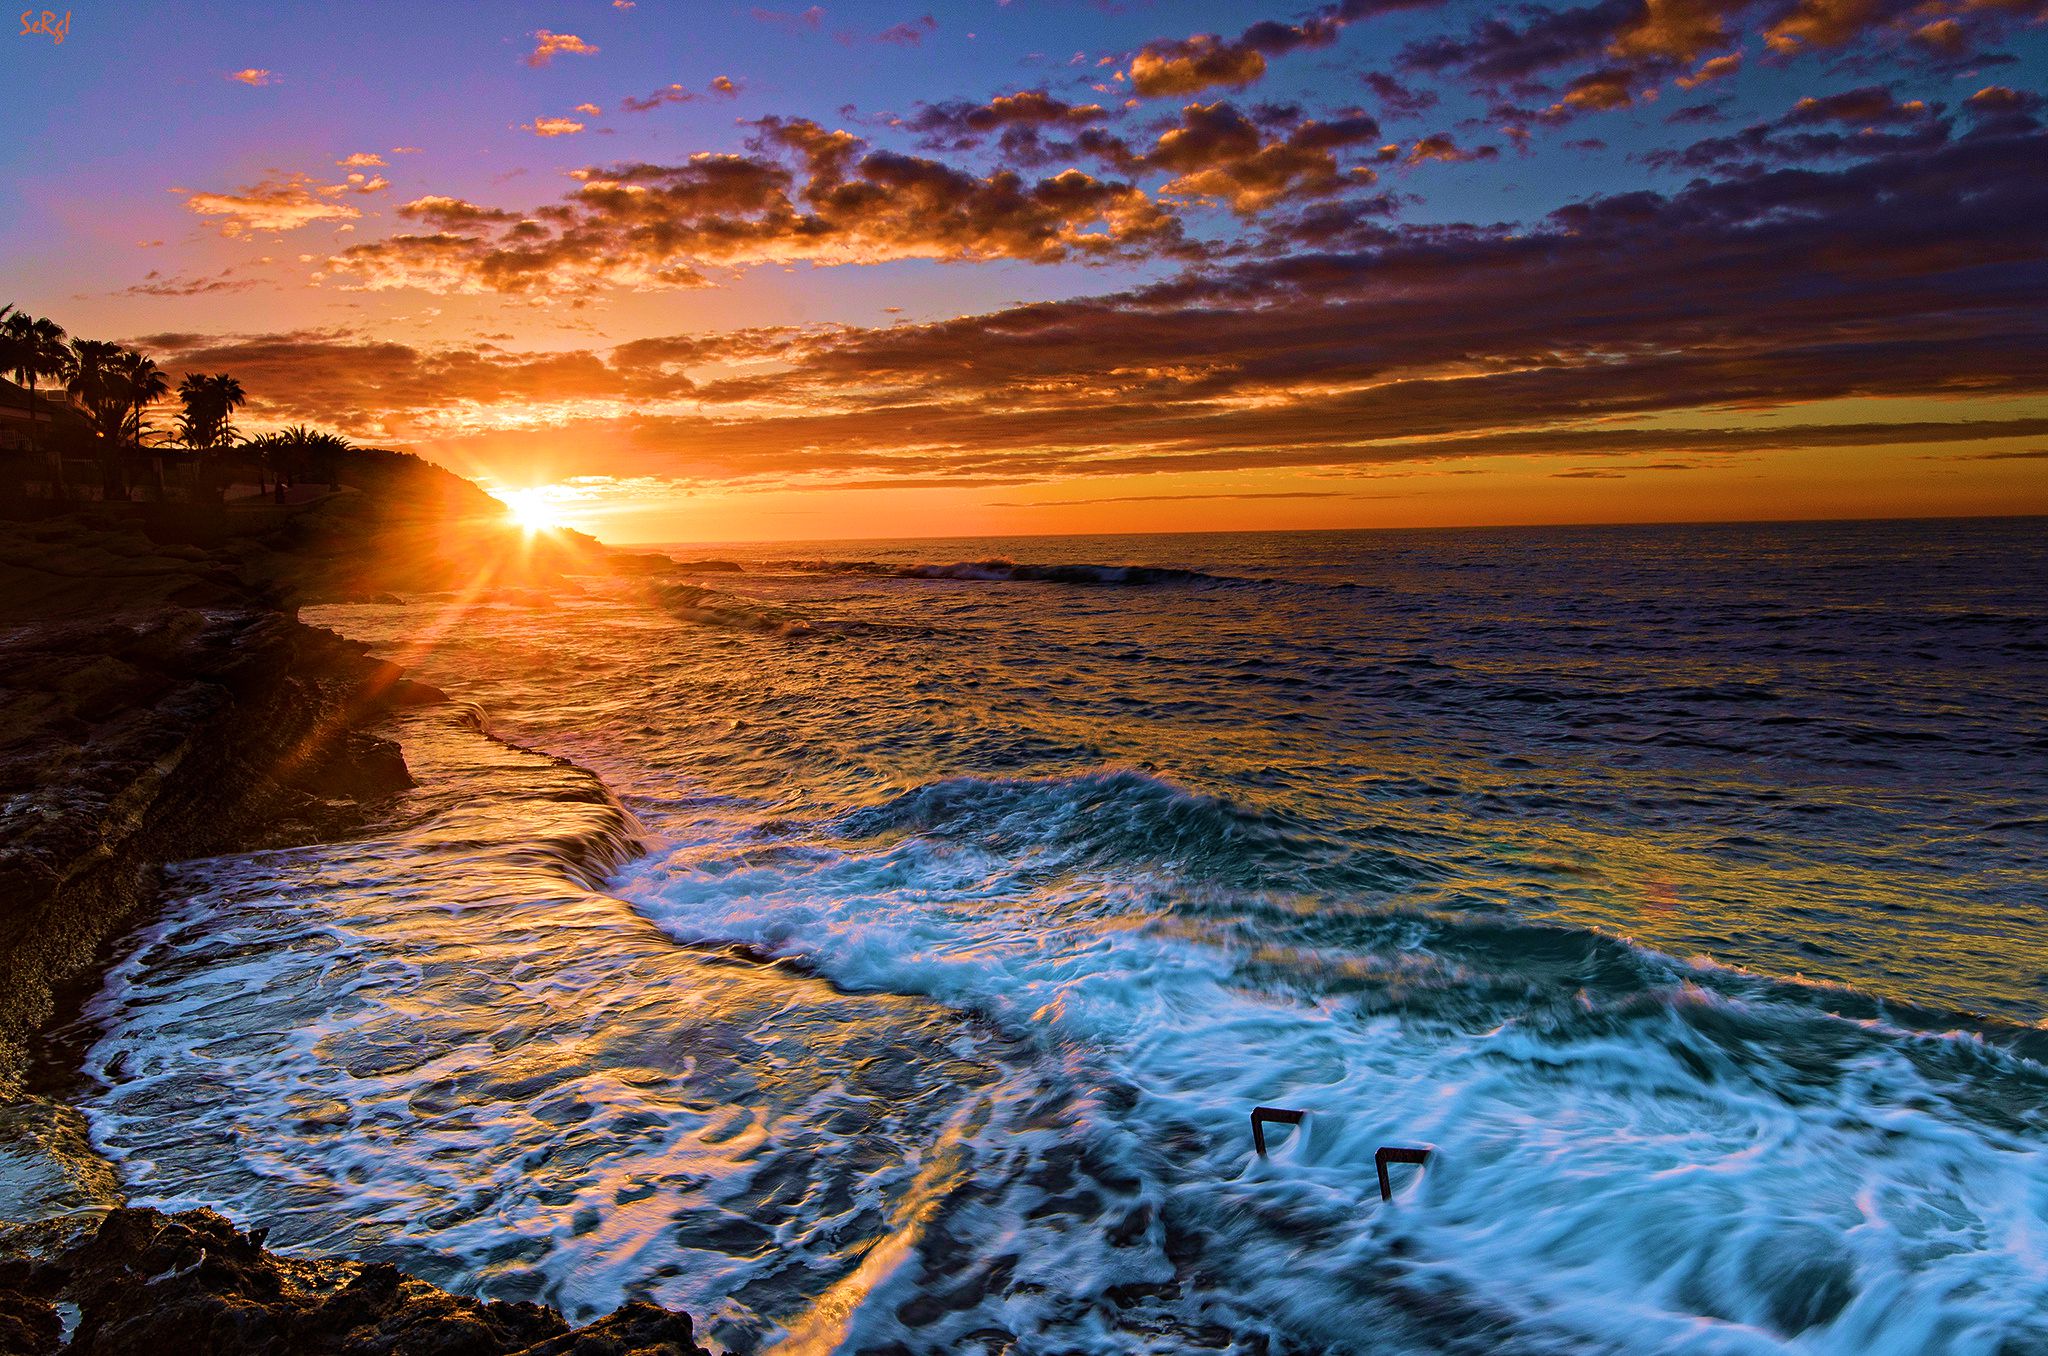 Free Download Sunset Beaches Backgrounds - PixelsTalk.Net